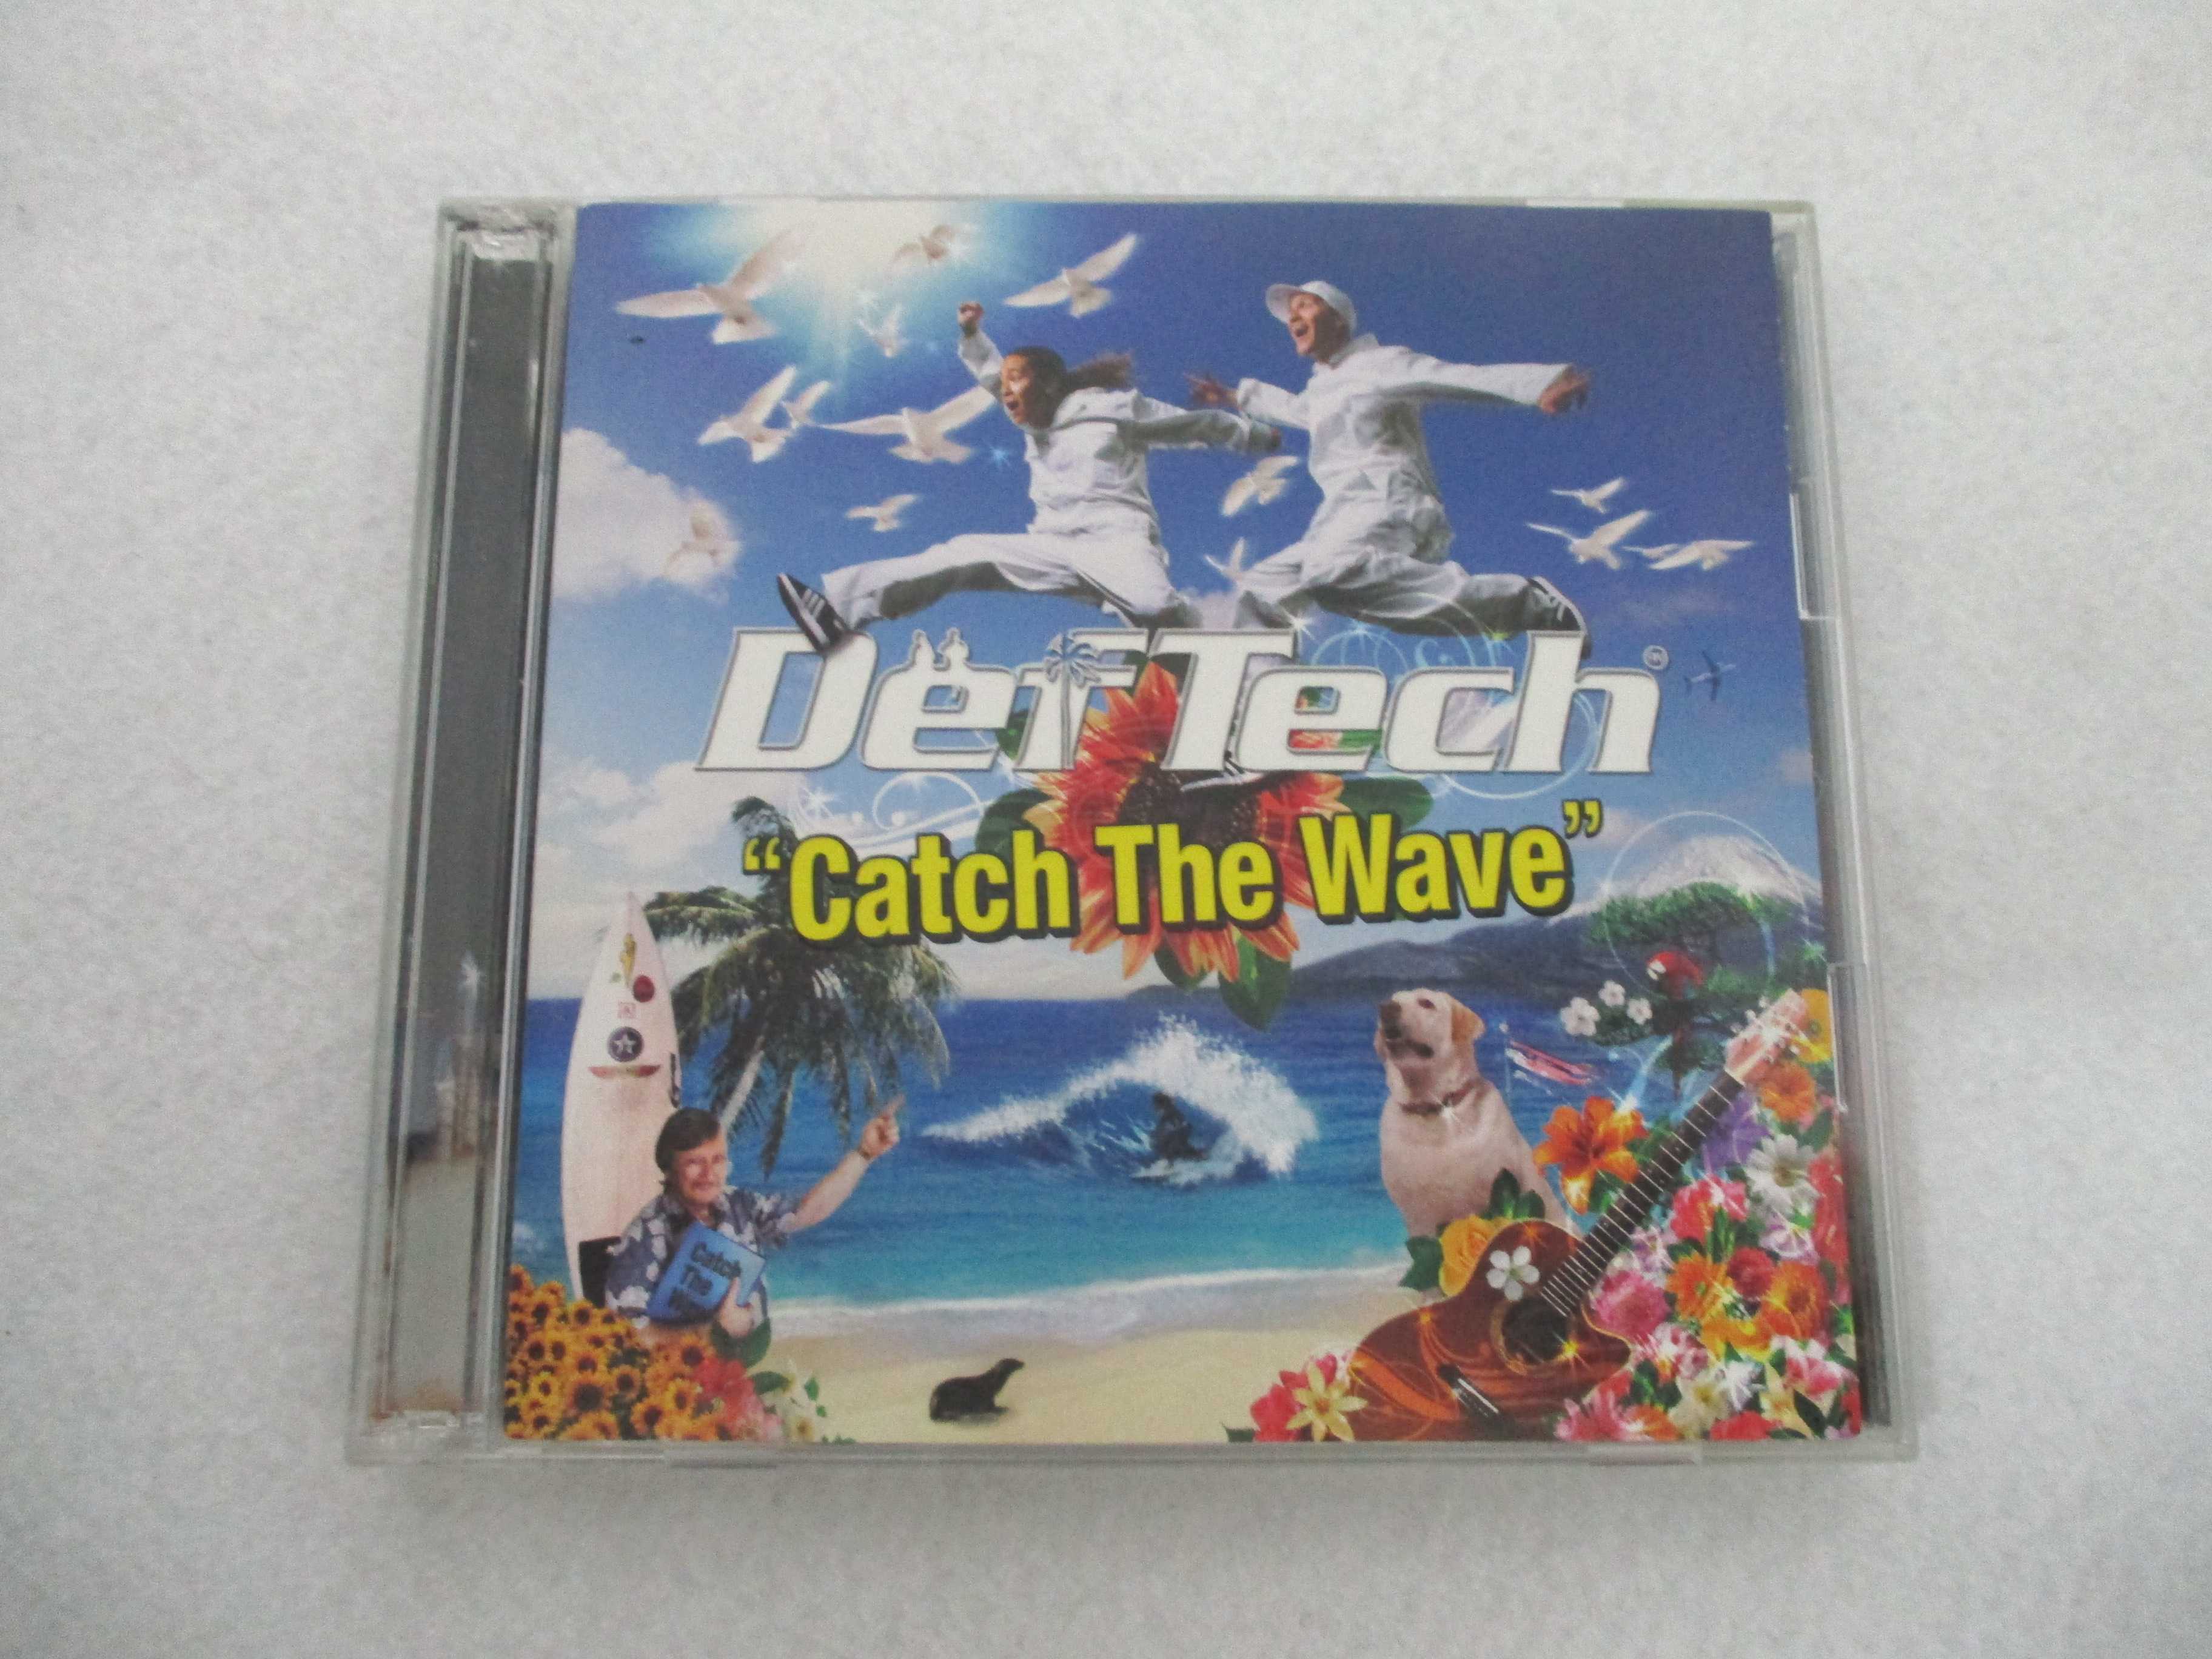 AC06701 【中古】 【CD】 Catch The Wave/Def Tech